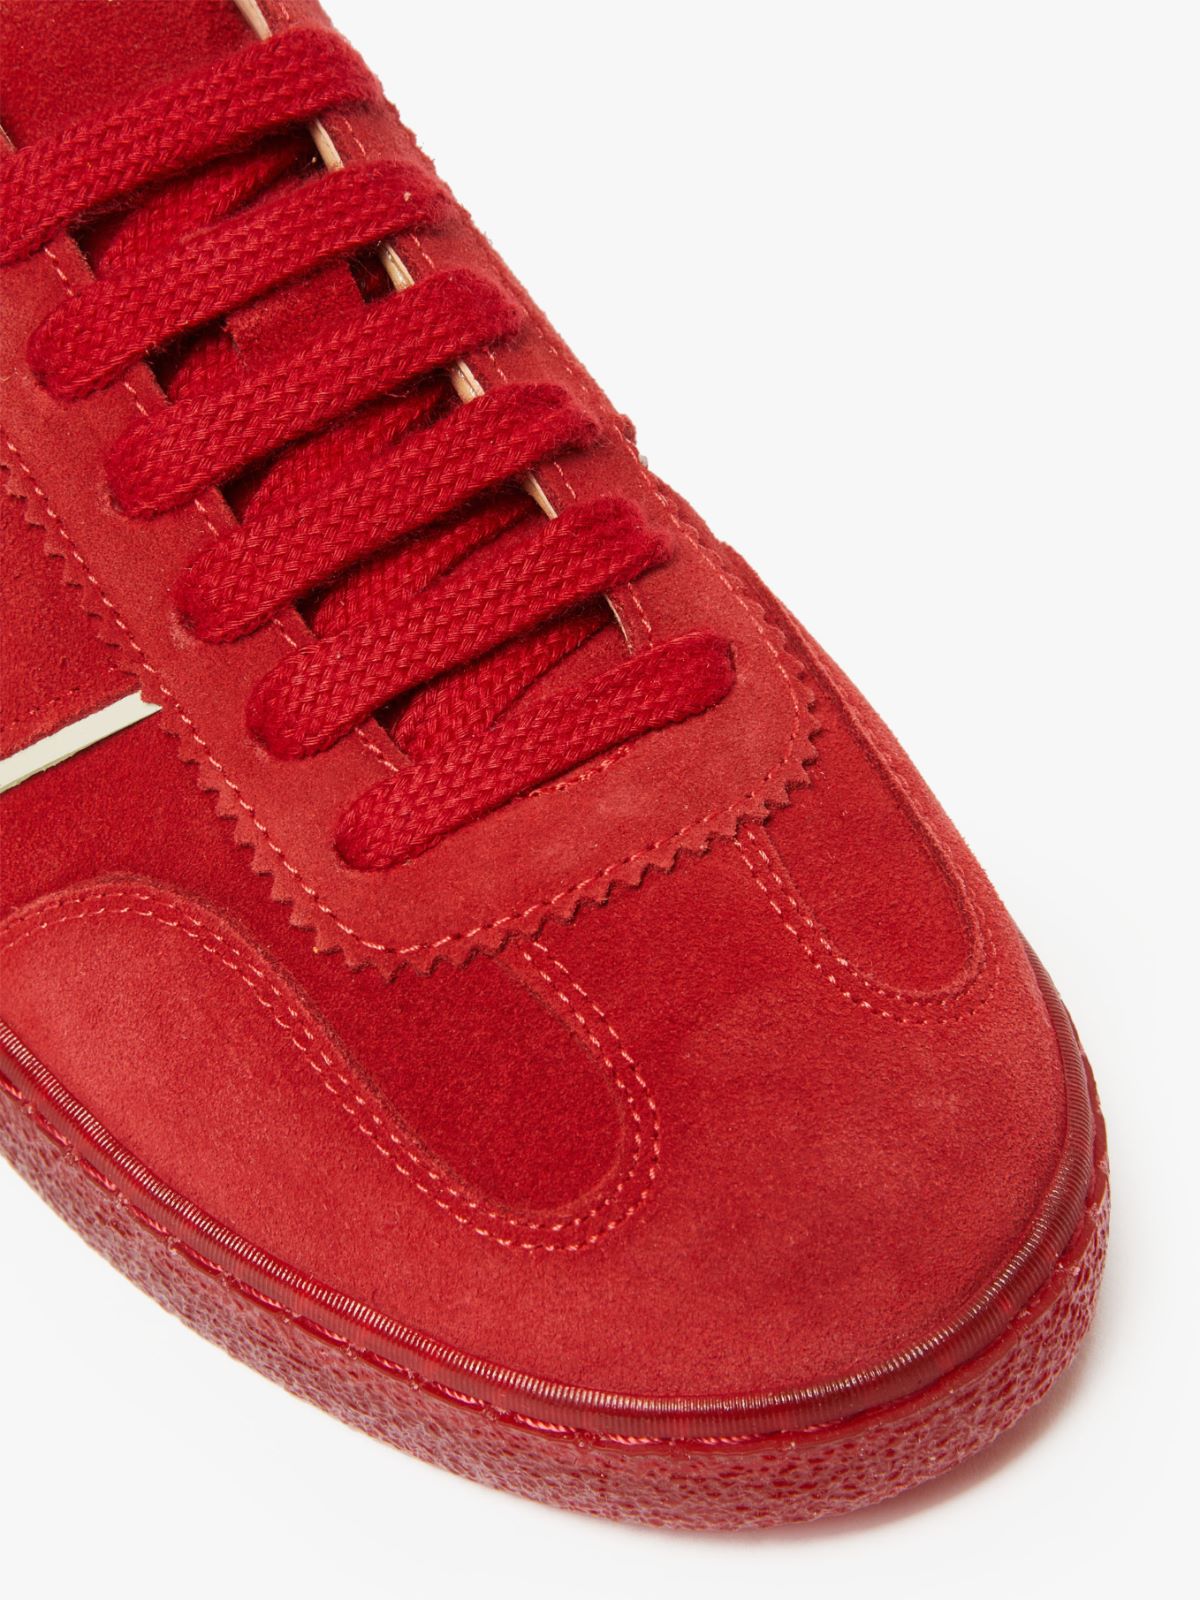 Leather sneakers - RED - Weekend Max Mara - 4